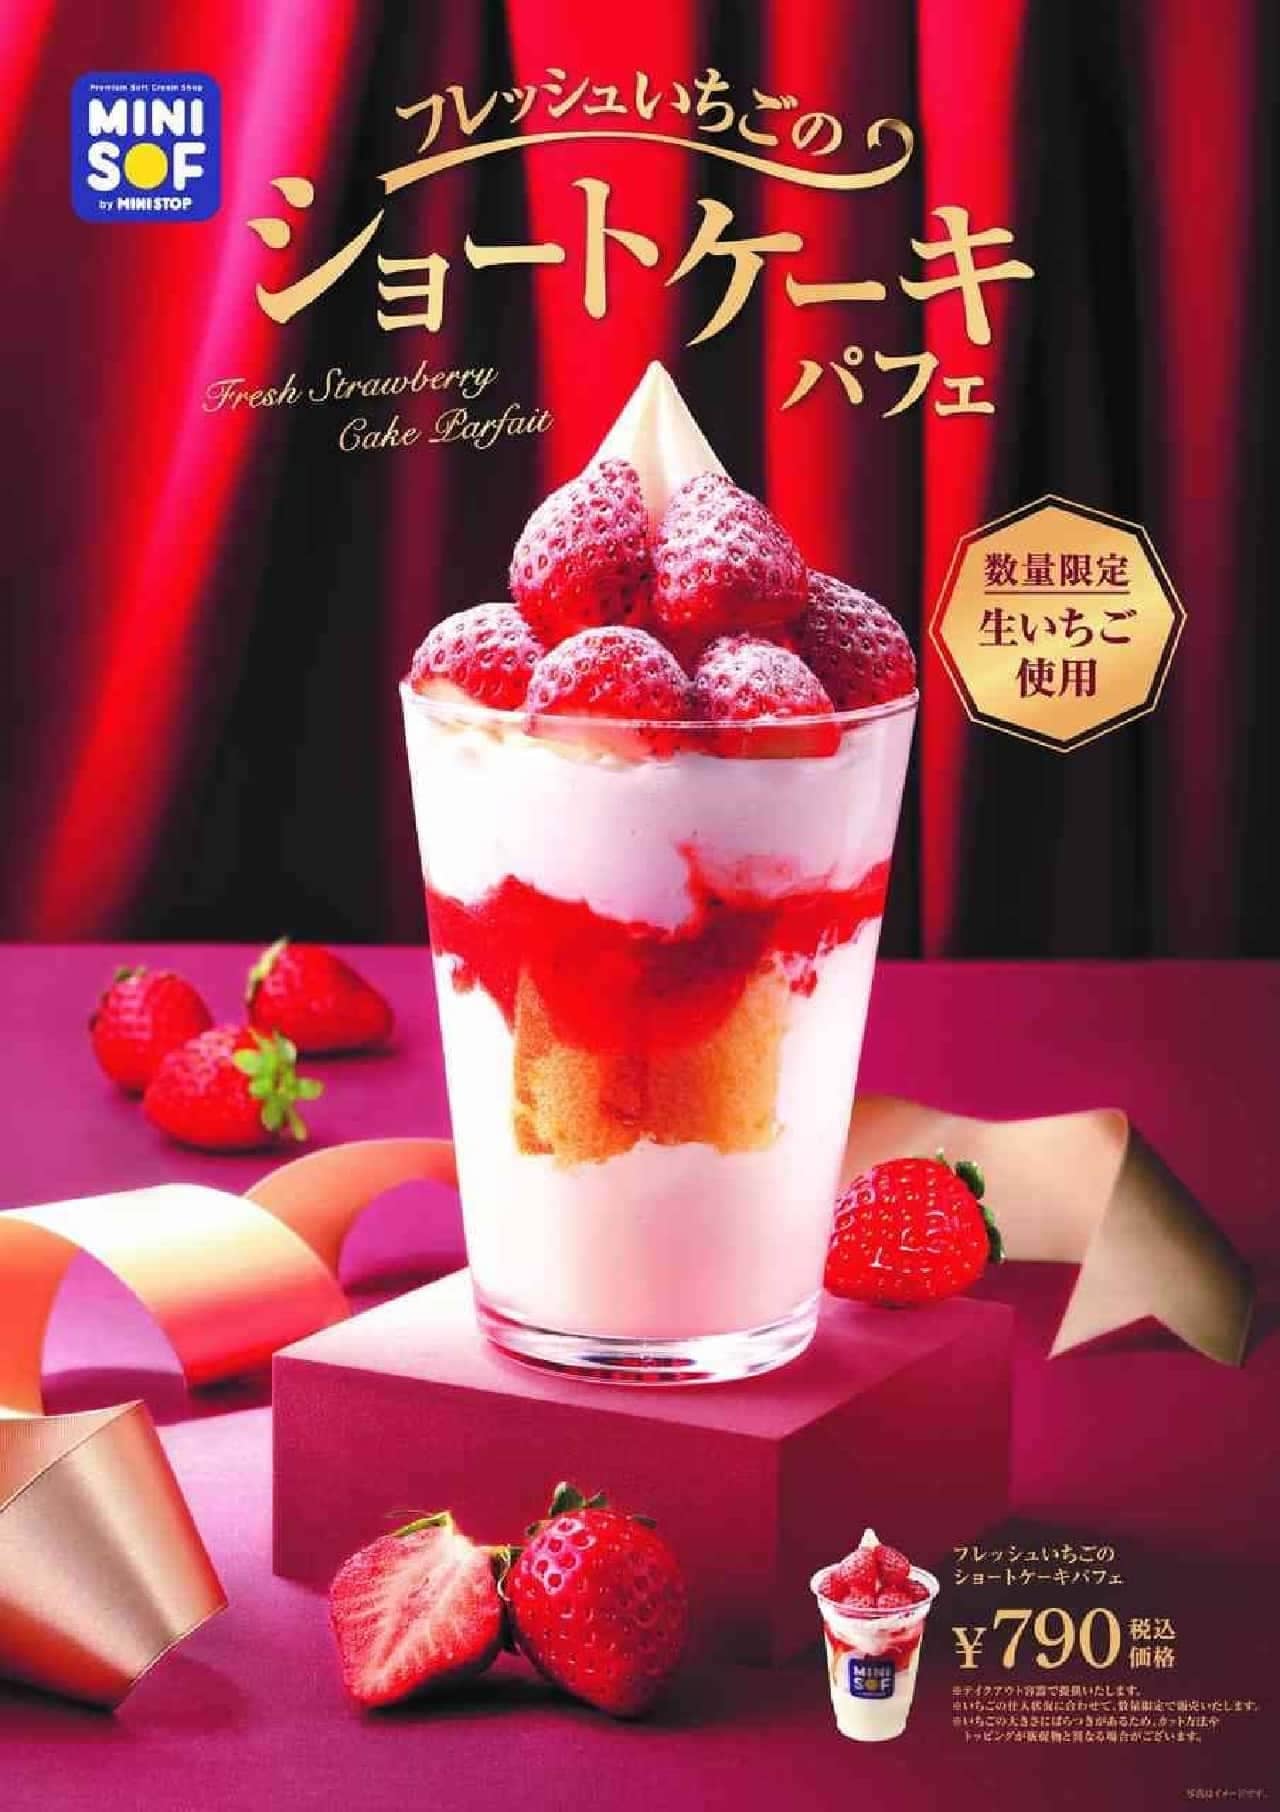 MINISOF "Fresh Strawberry Shortcake Parfait"